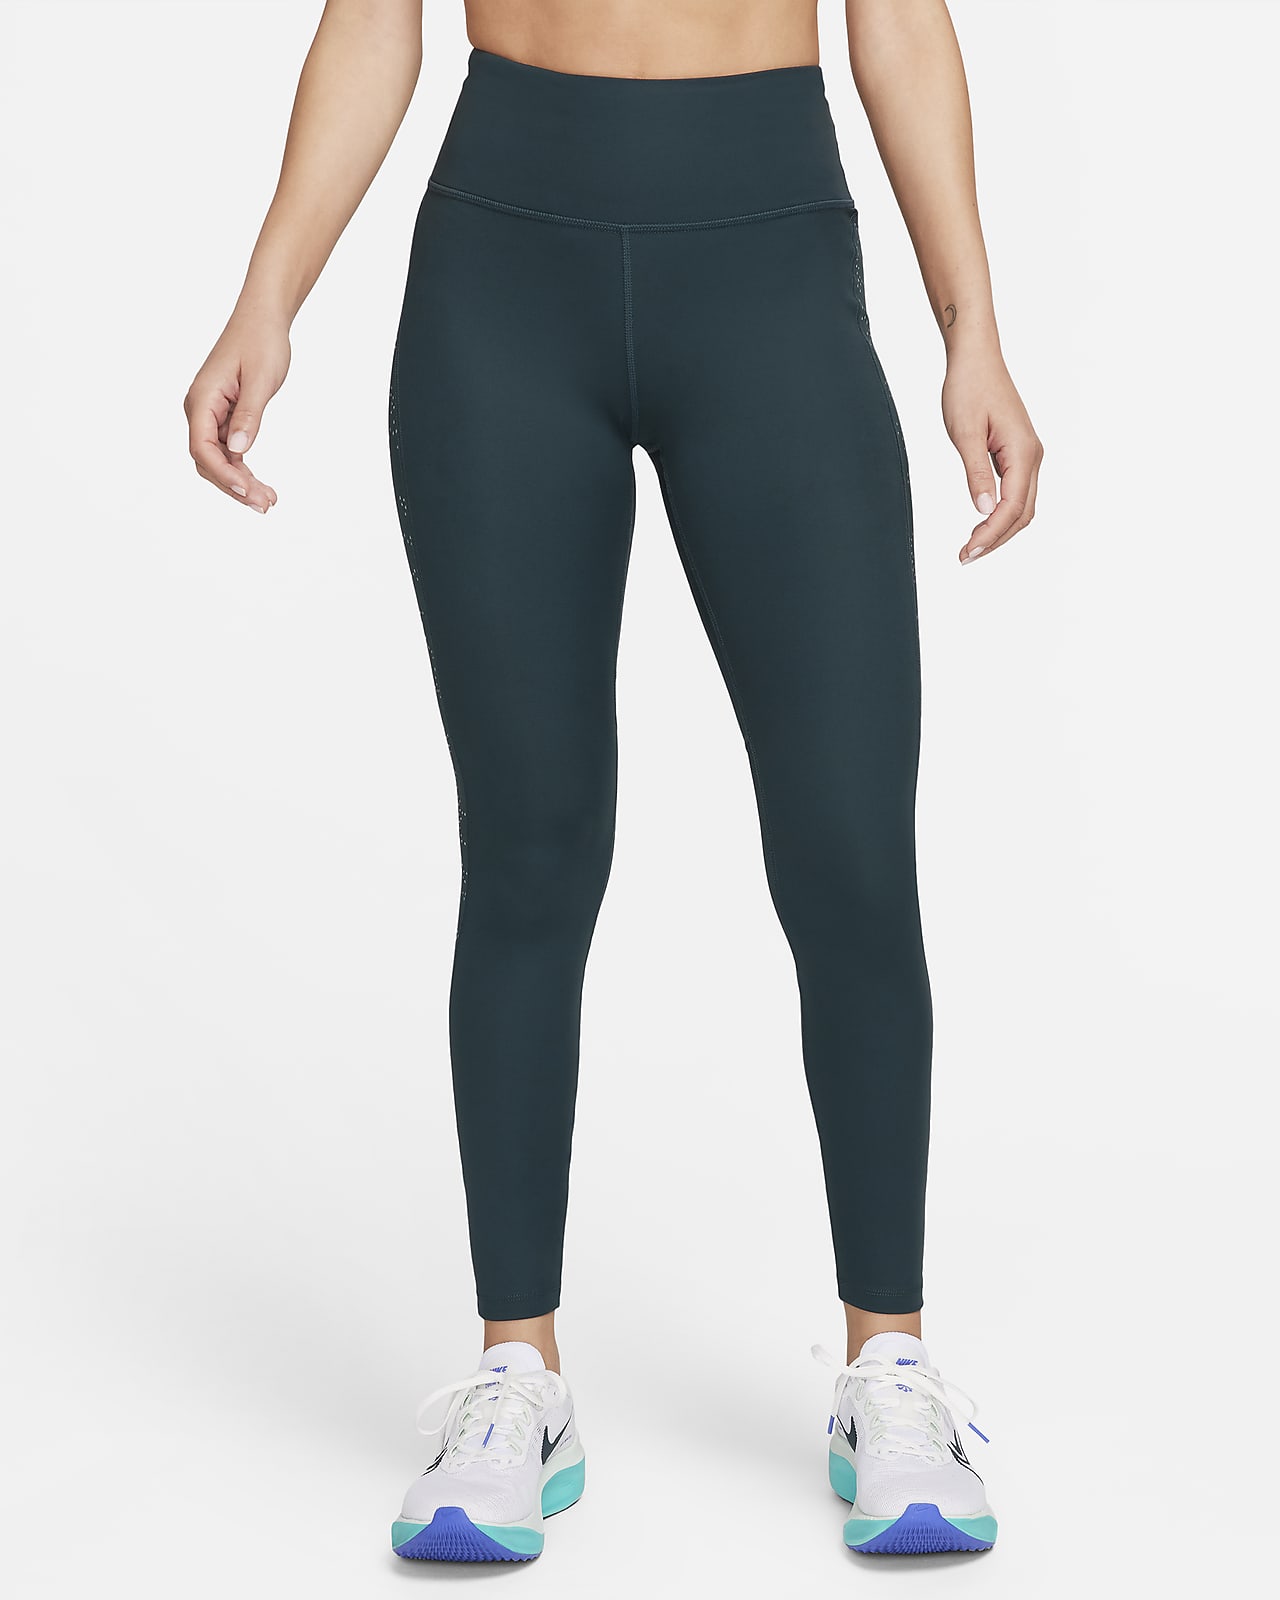 Nike Women's Fast 7/8 Printed Running Leggings - Small - New